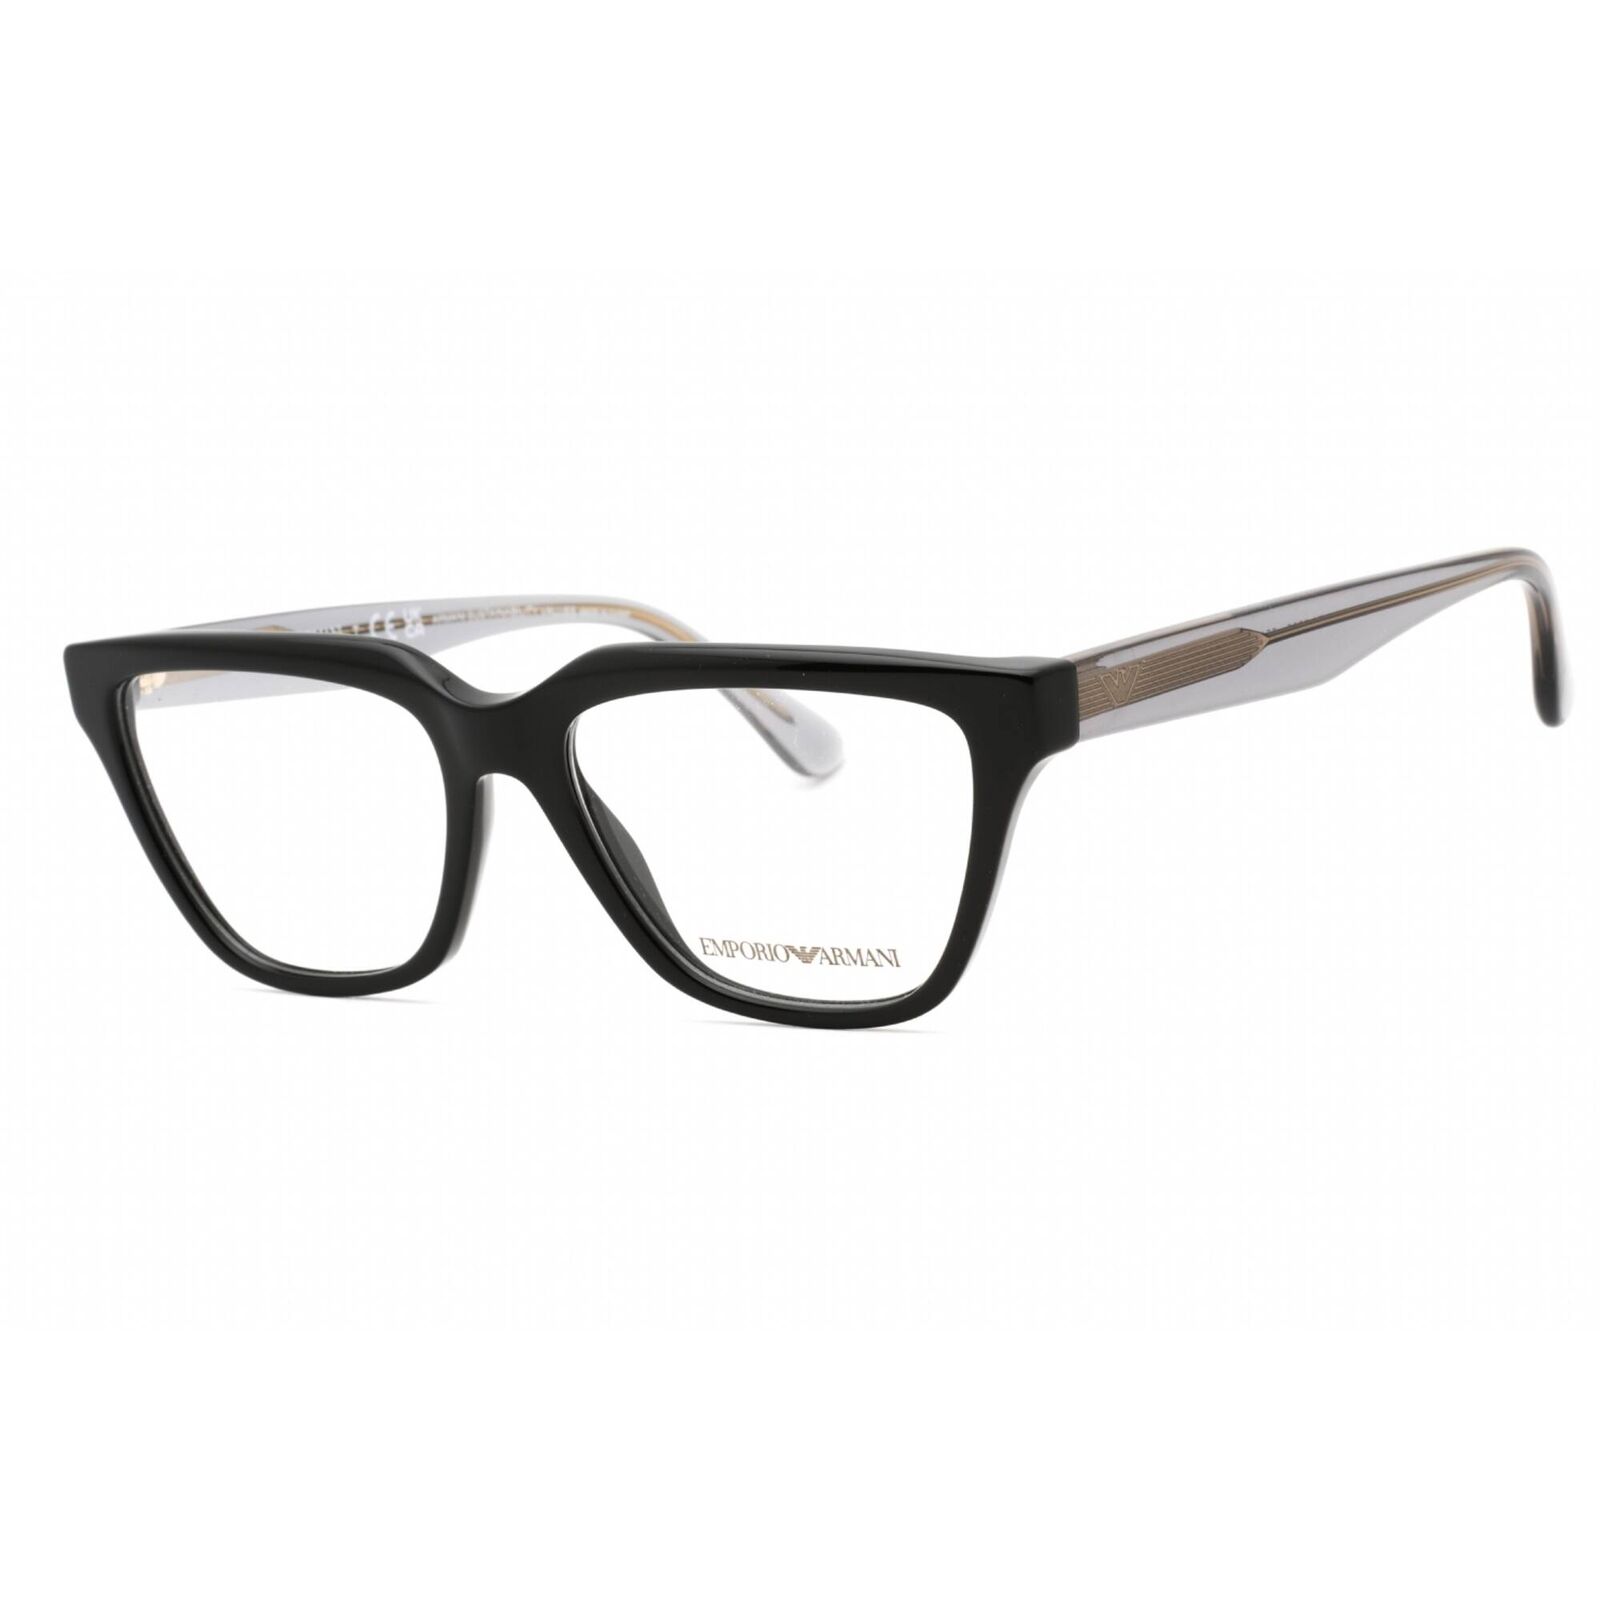 Emporio Armani Women's Eyeglasses Shiny Black Rectangular Frame 0EA3208 5017 Emporio Armani 0EA3208 5017